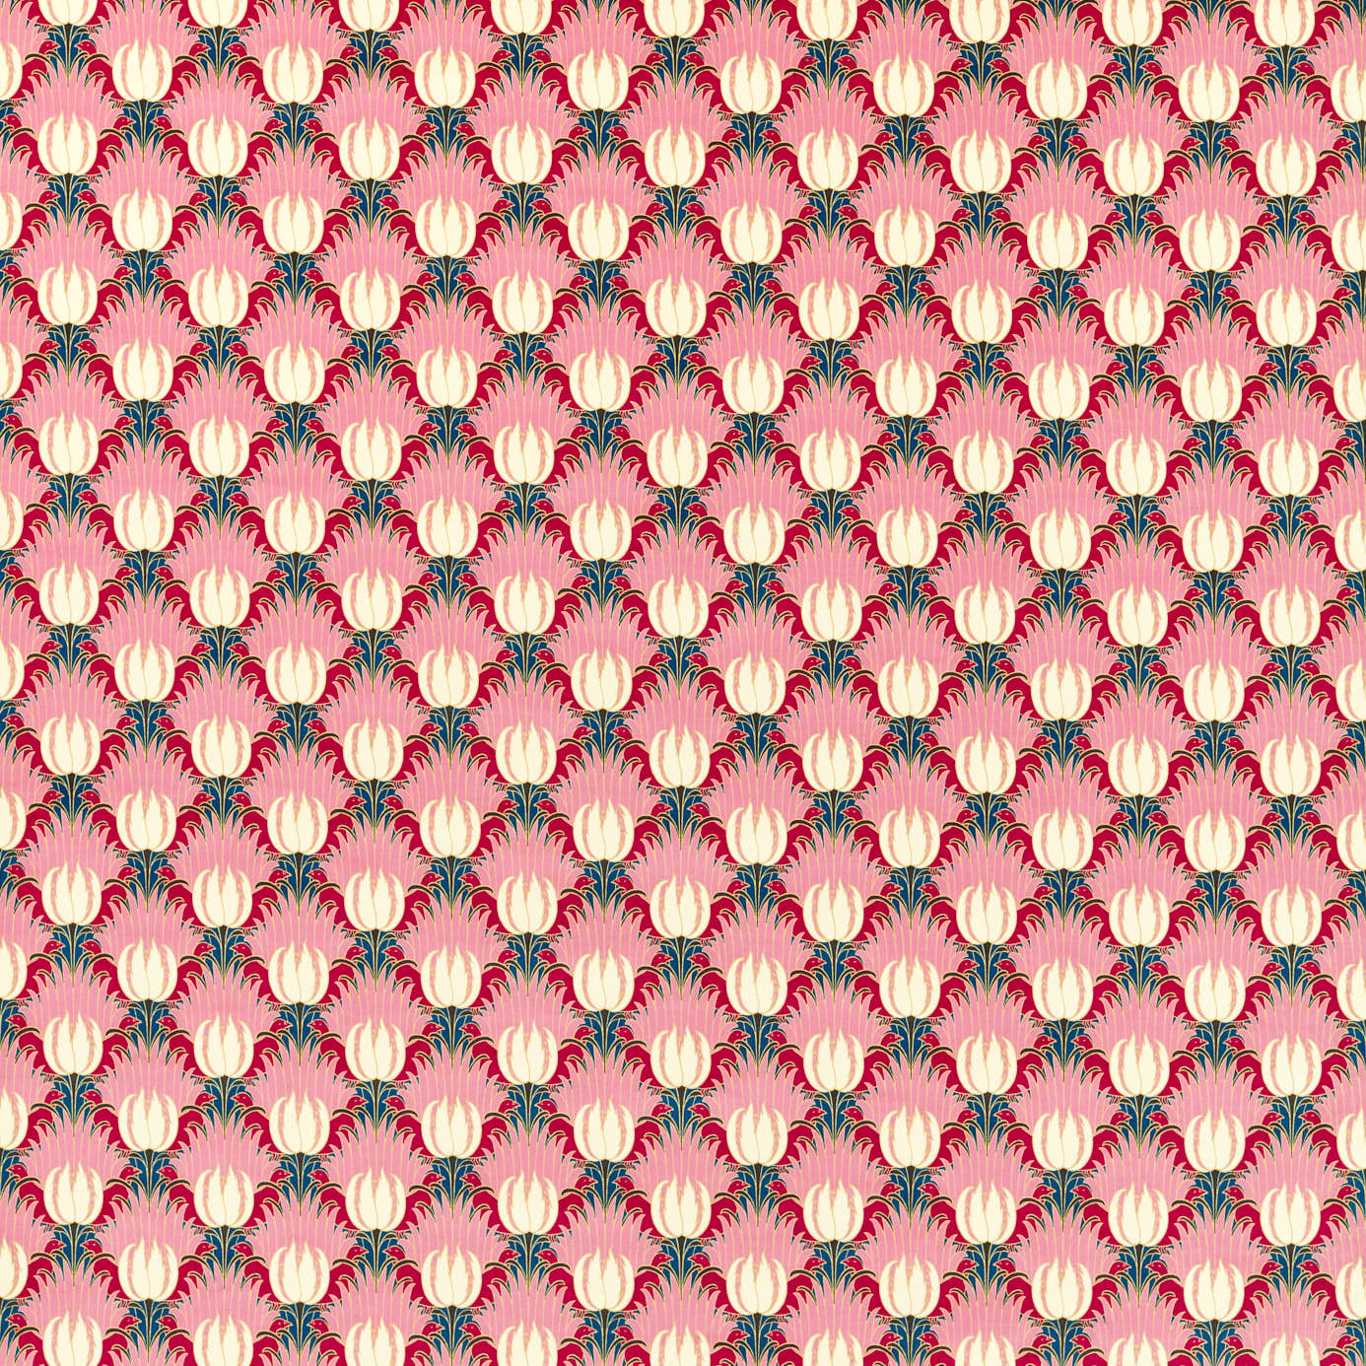 Tulip and Bird Fabric - Pink